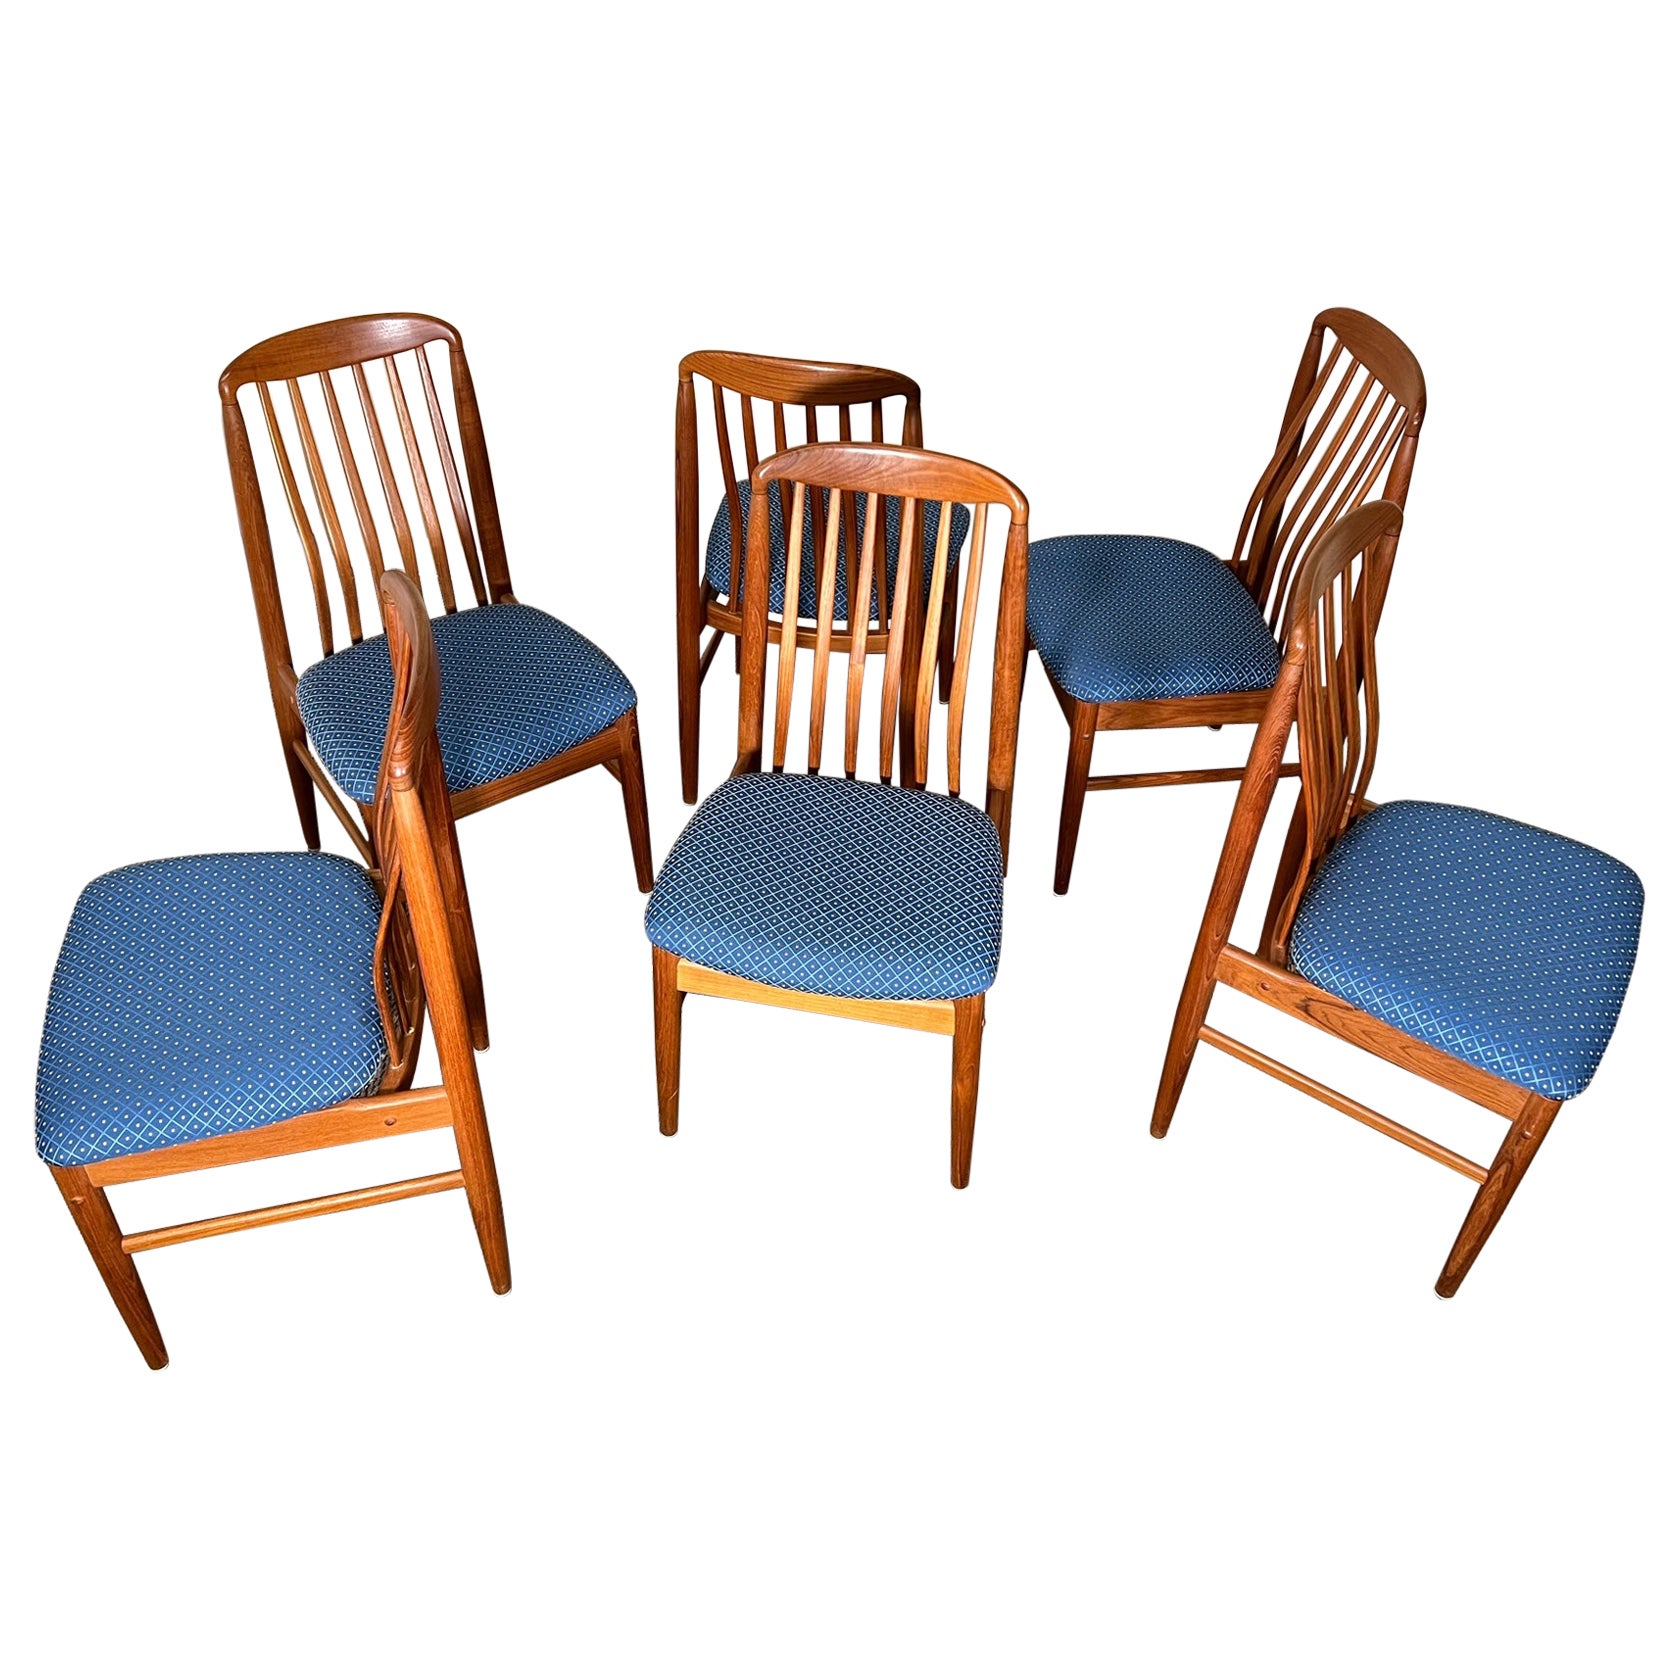 Set of 6 Midcentury Danish Modern Teak Dining Chairs by Benny Linden Slat Back